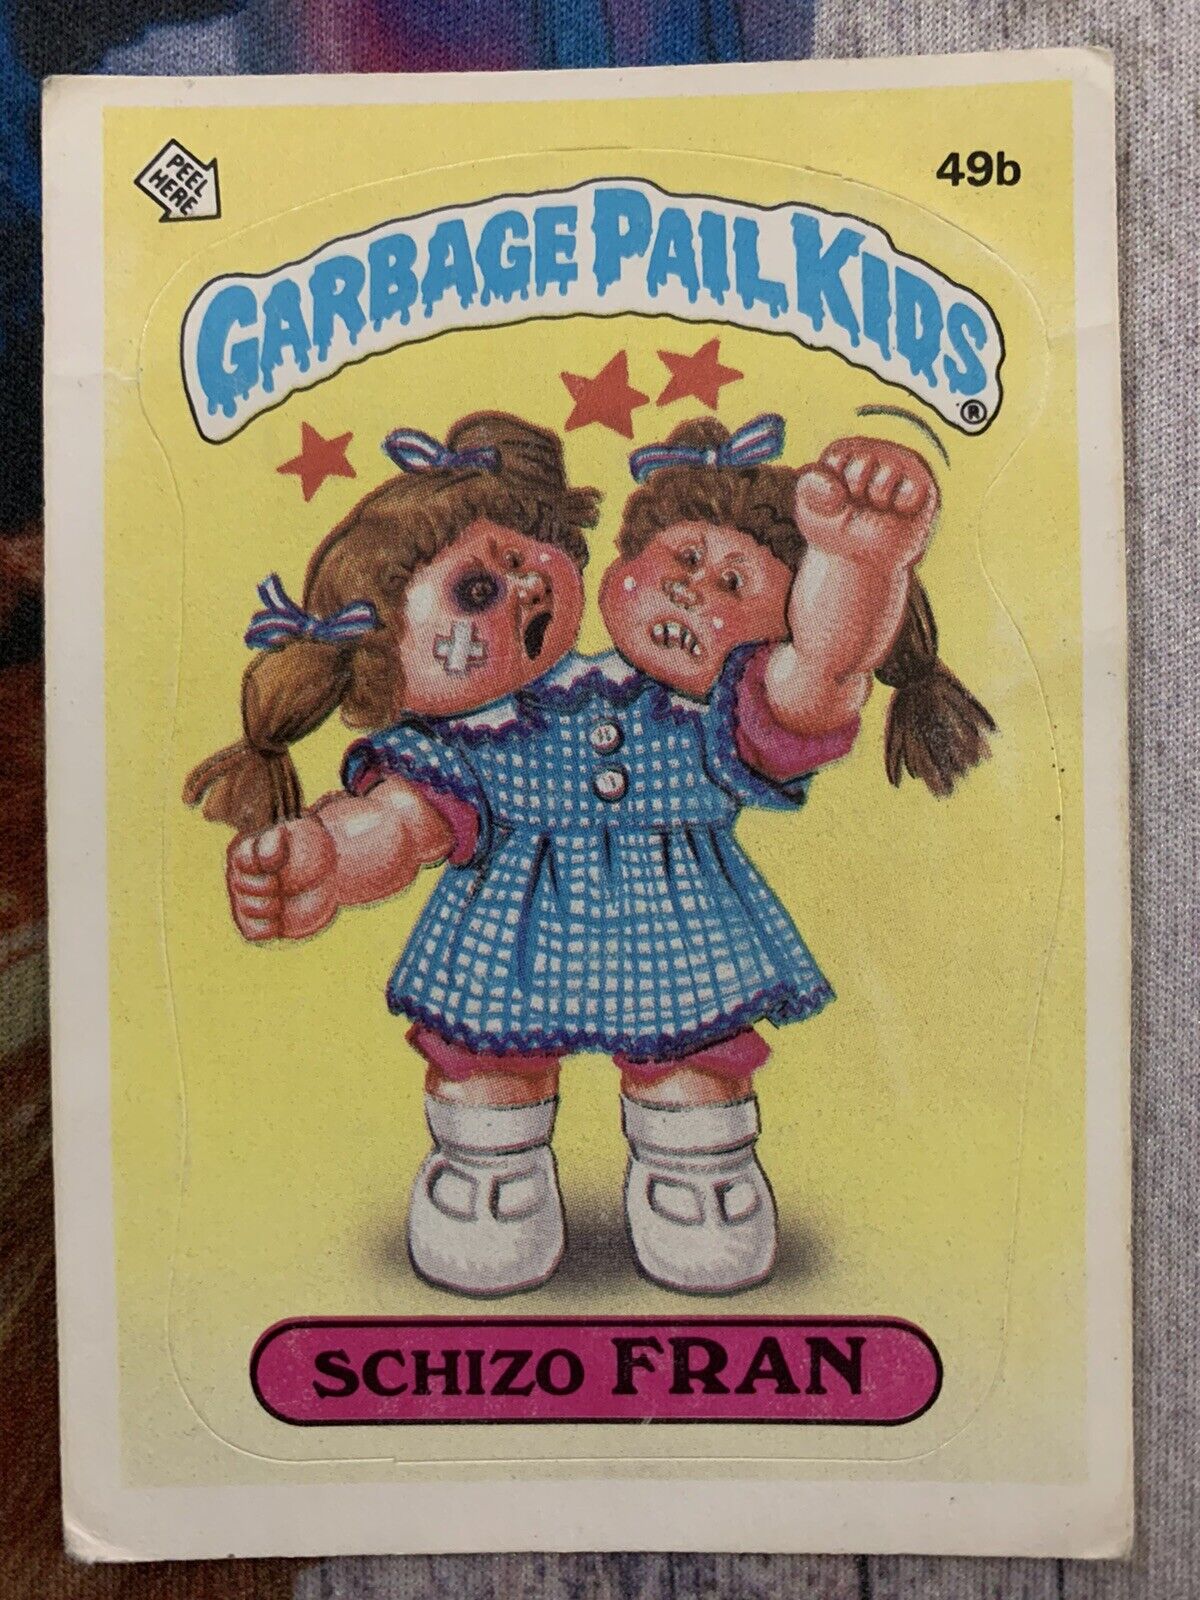 1985 Topps Garbage Pail Kids Series 2 #49b SCHIZO FRAN